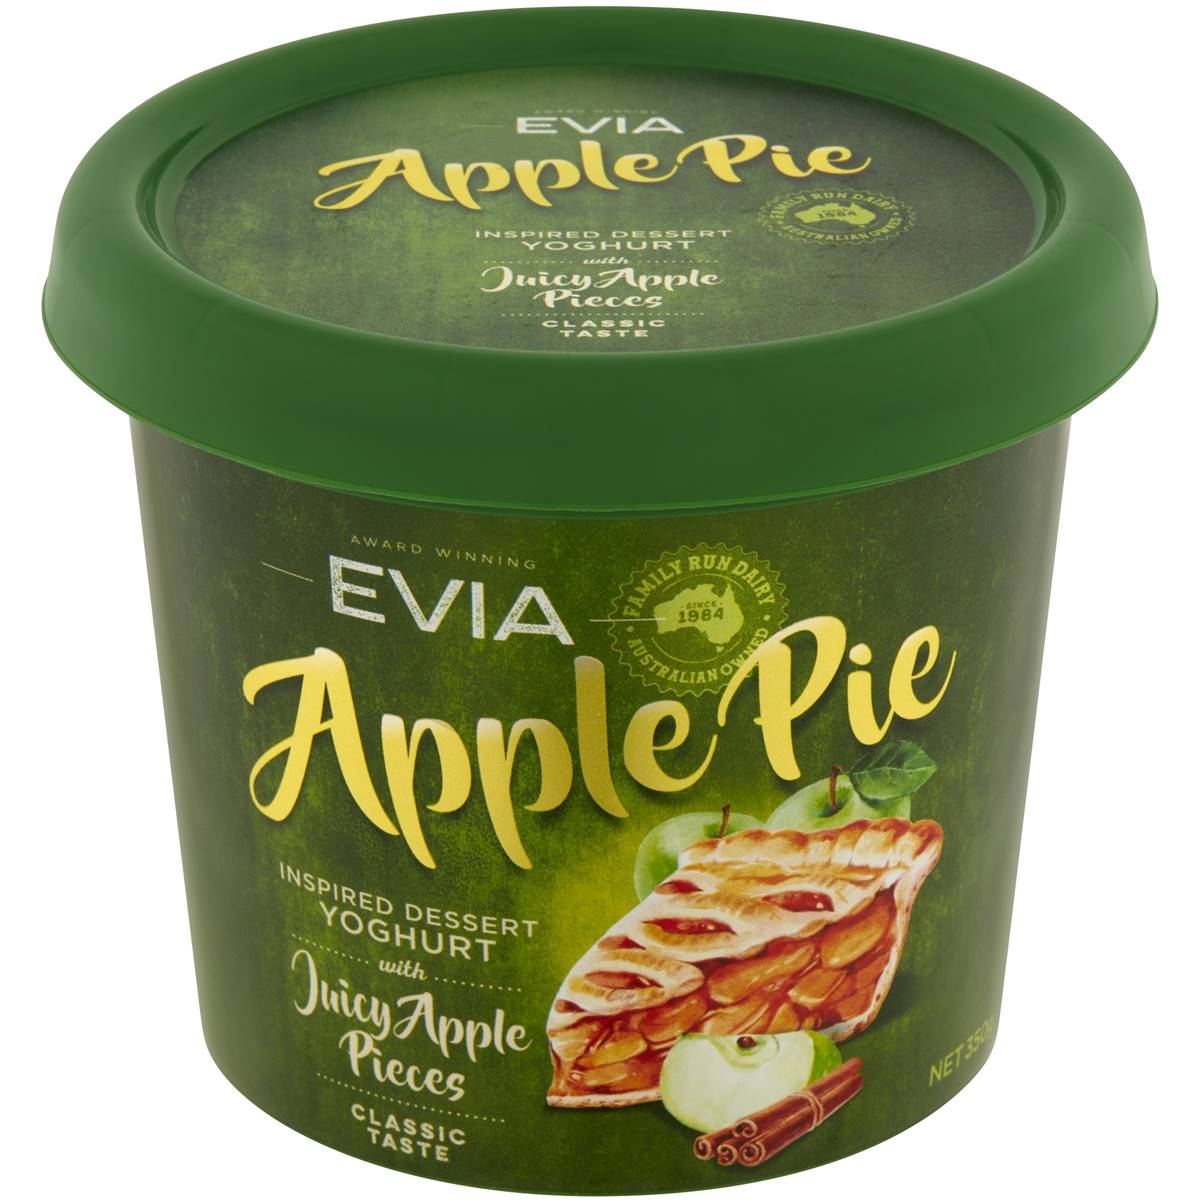 Calories in Evia Apple Pie Inspired Dessert Yoghurt